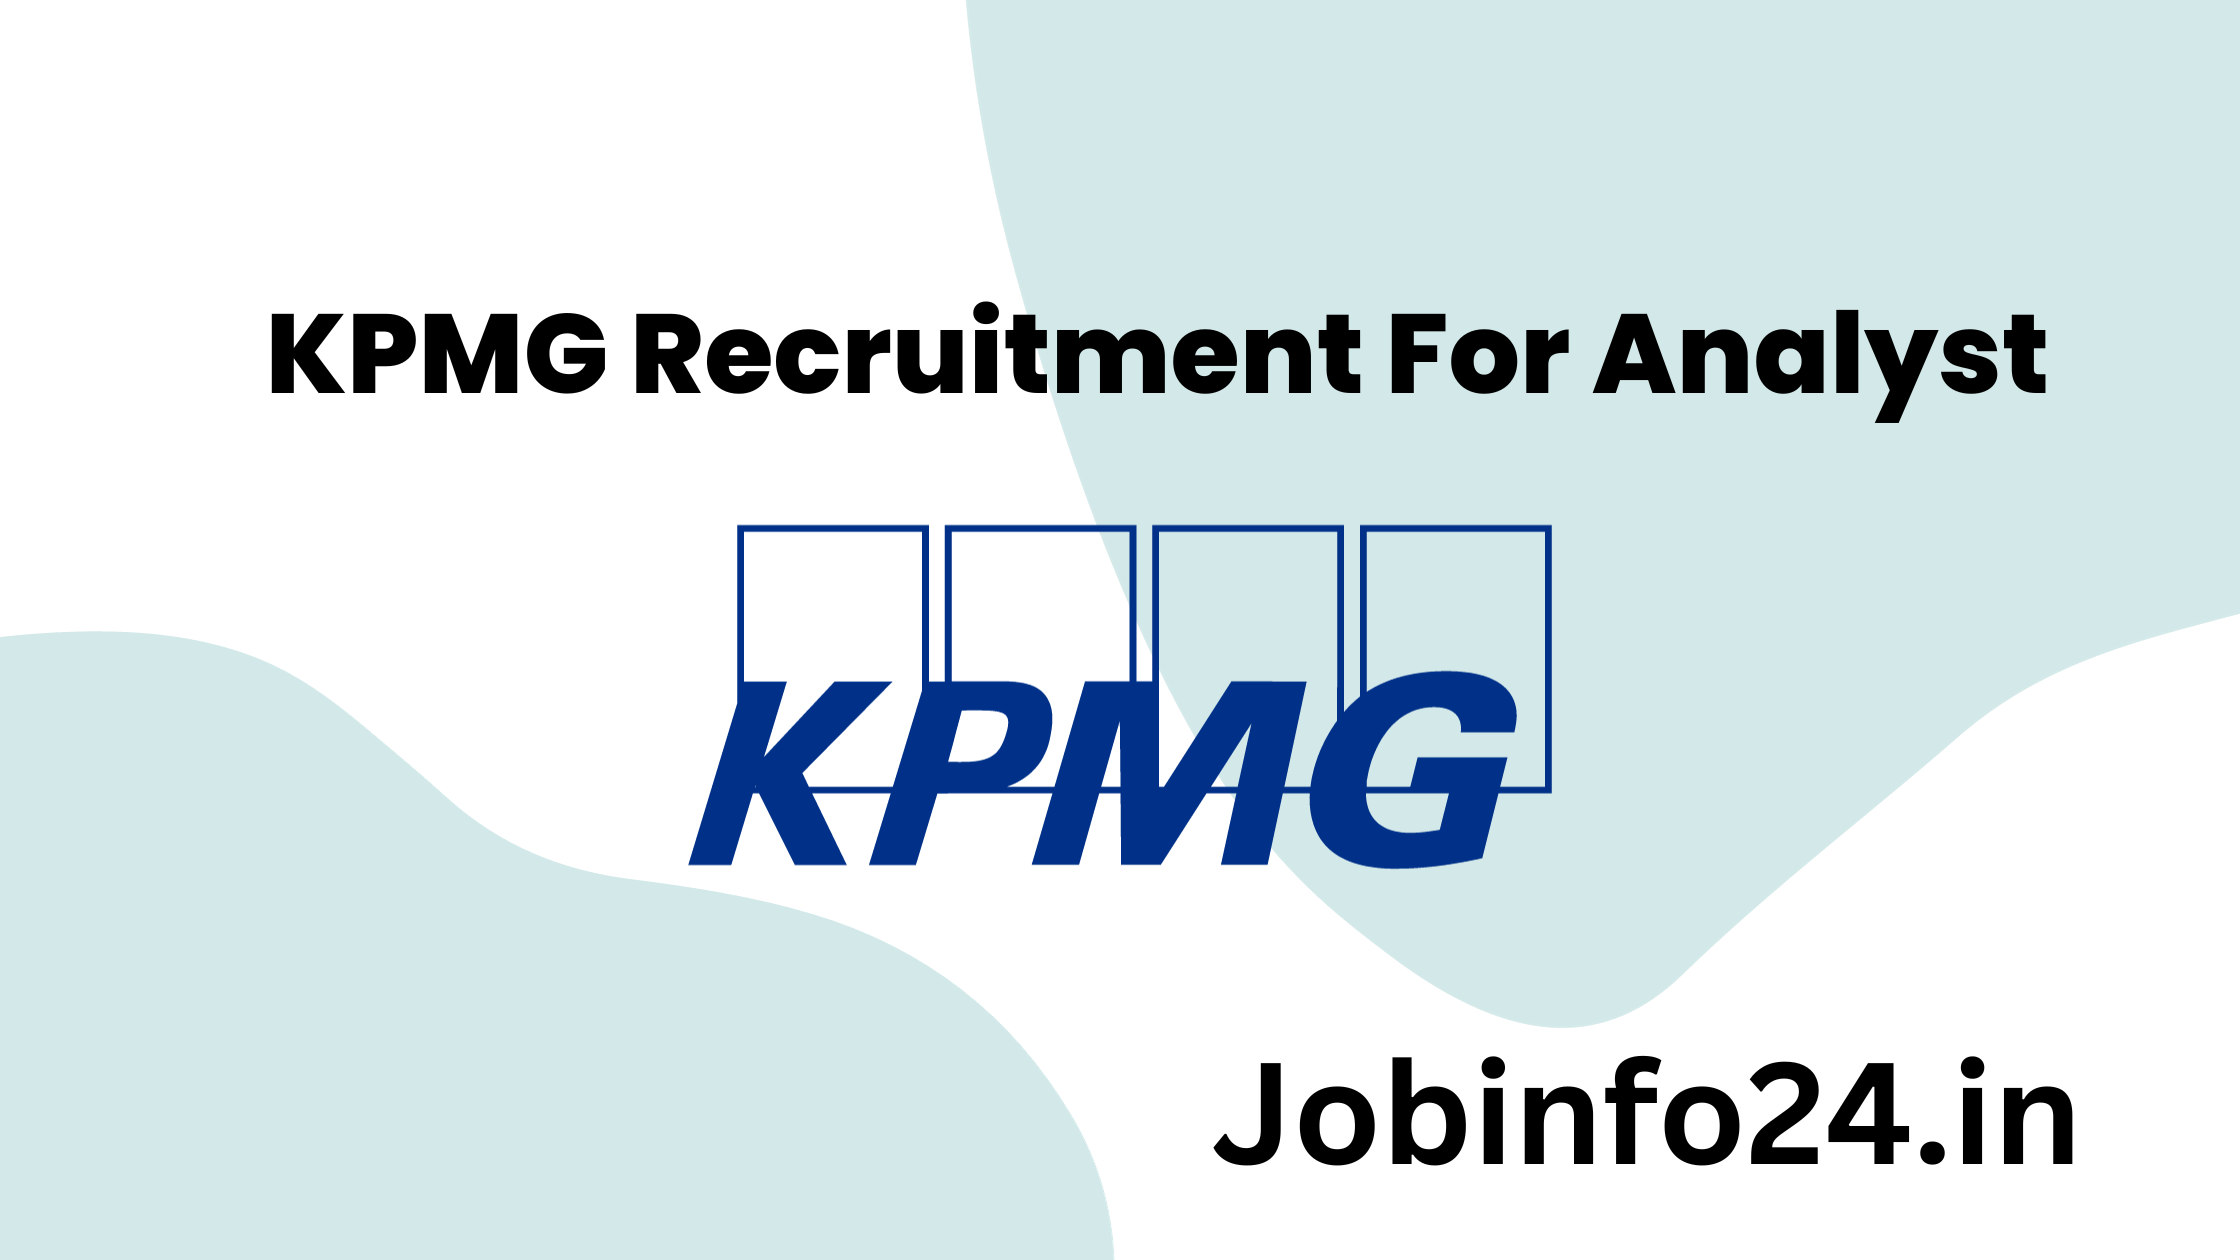 KPMG Recruitment For Analyst